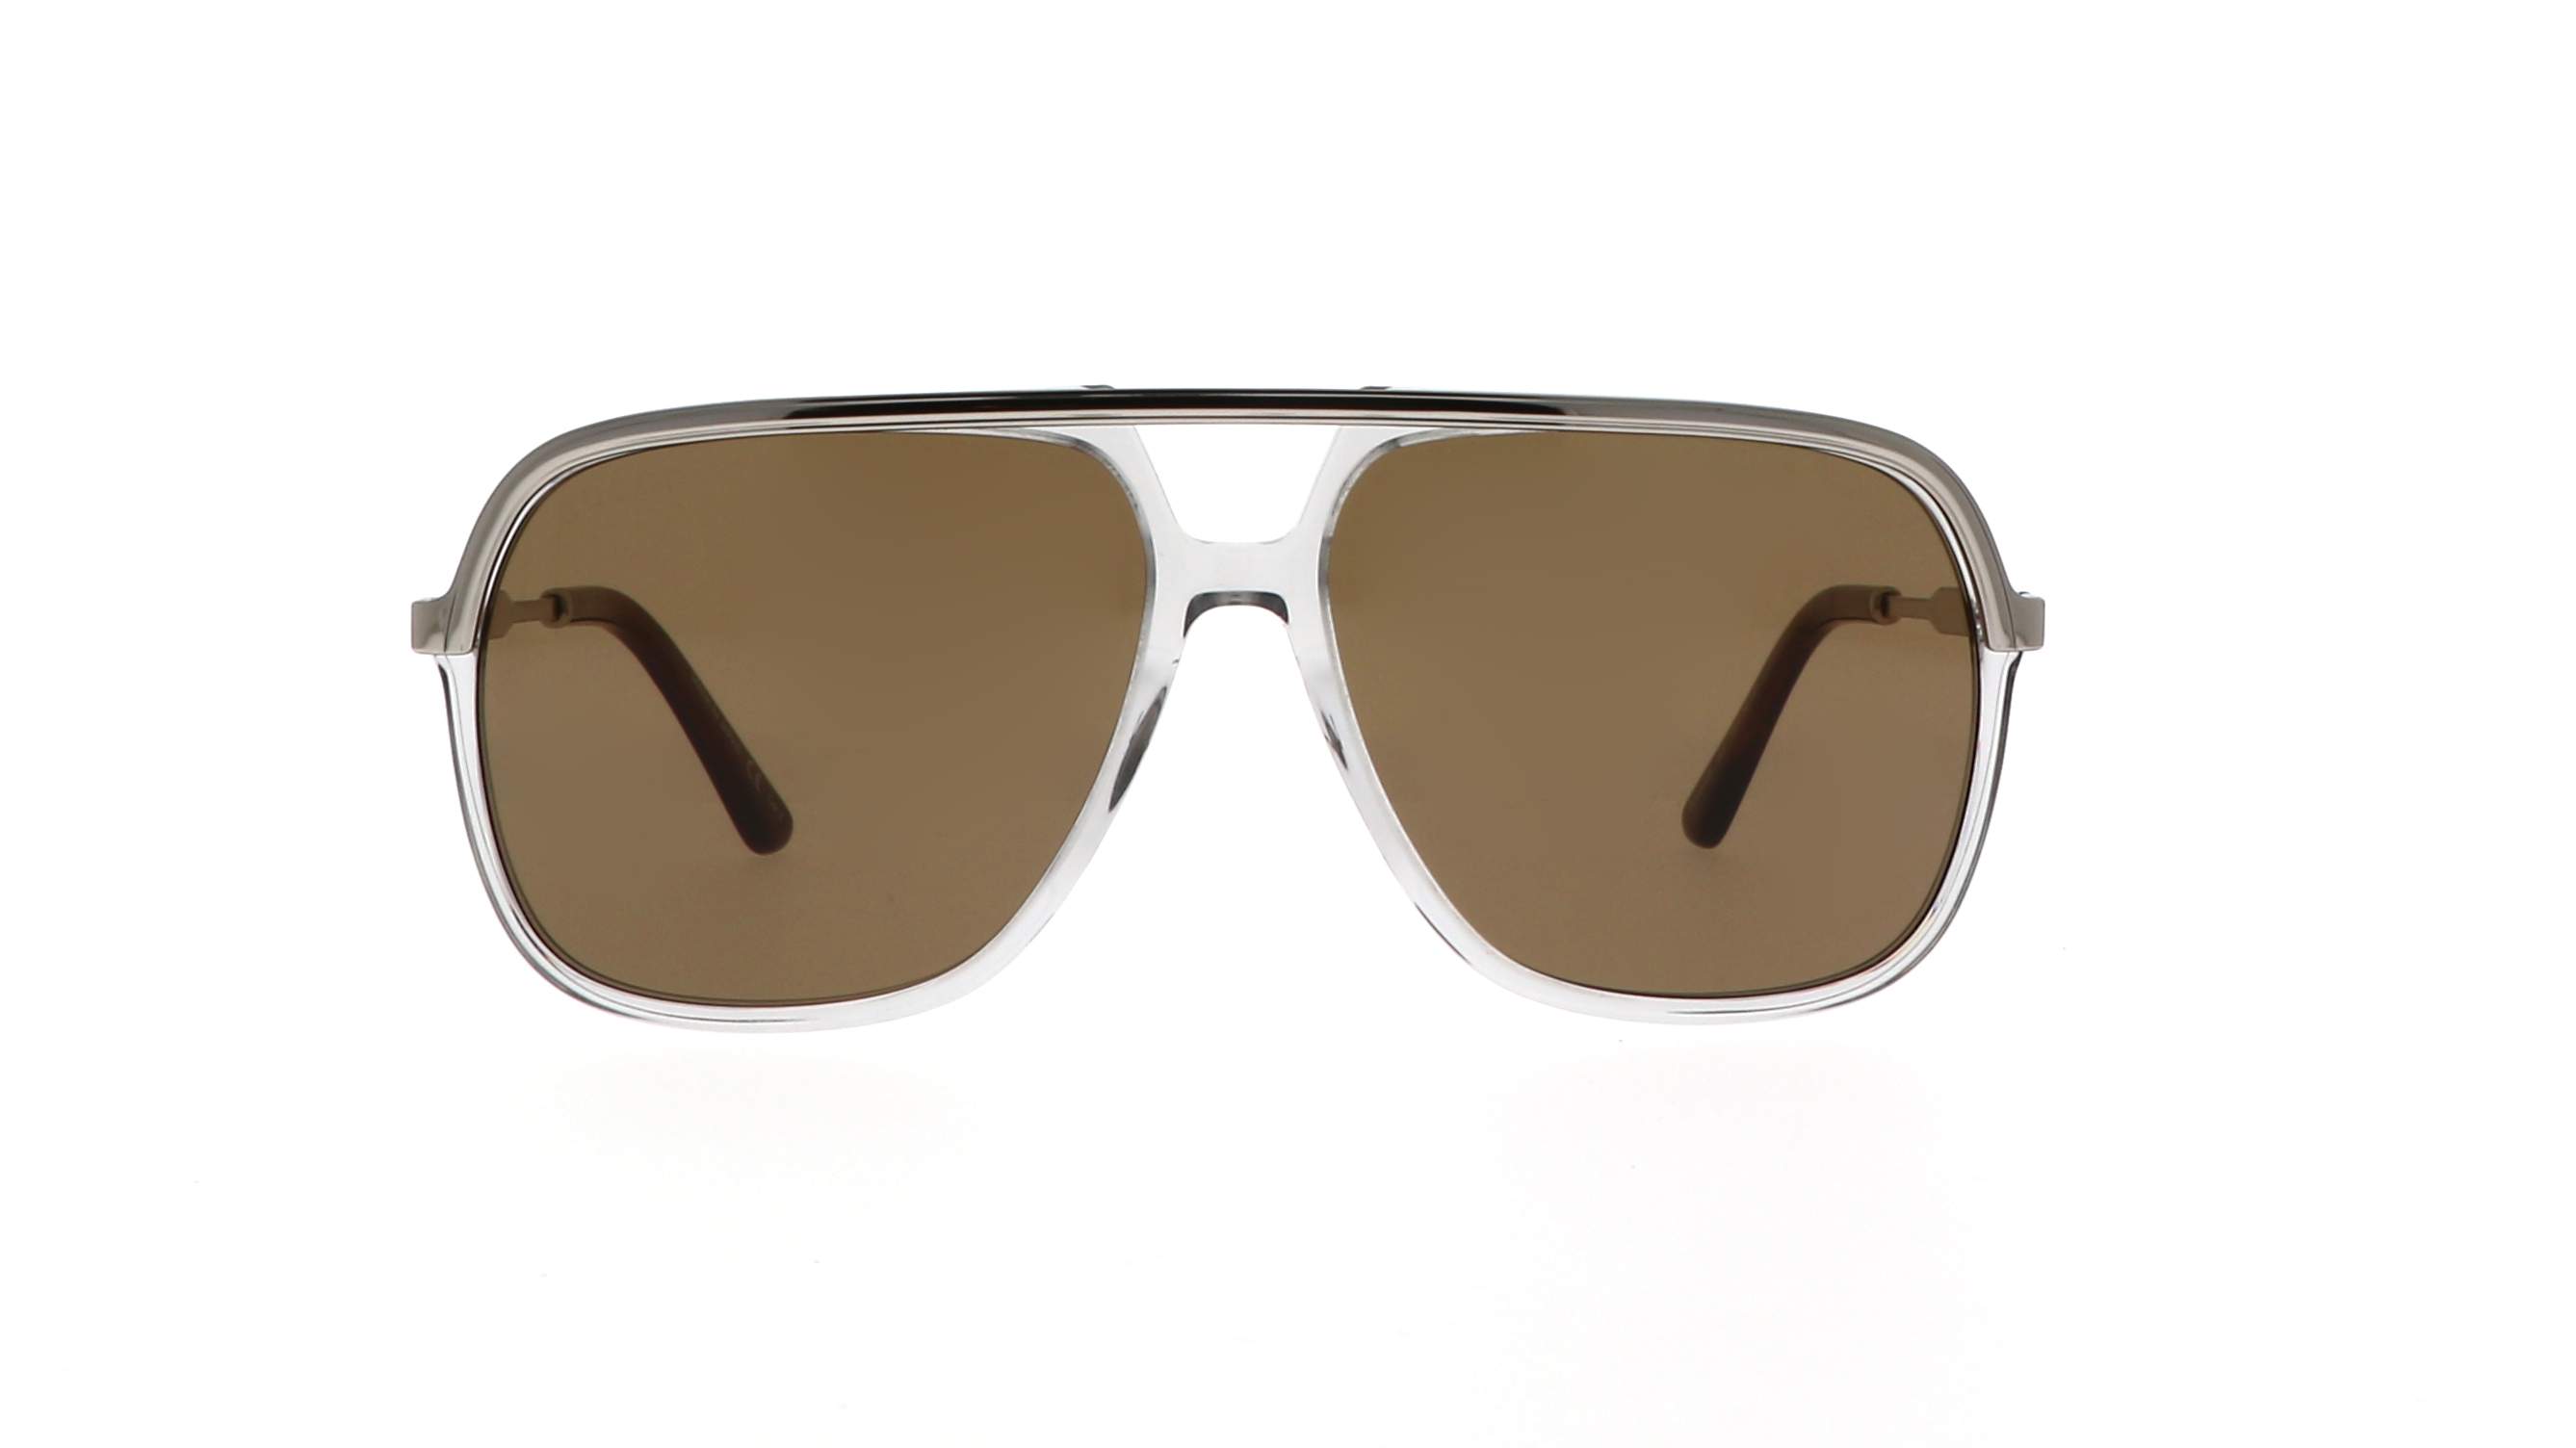 gg0200s sunglasses